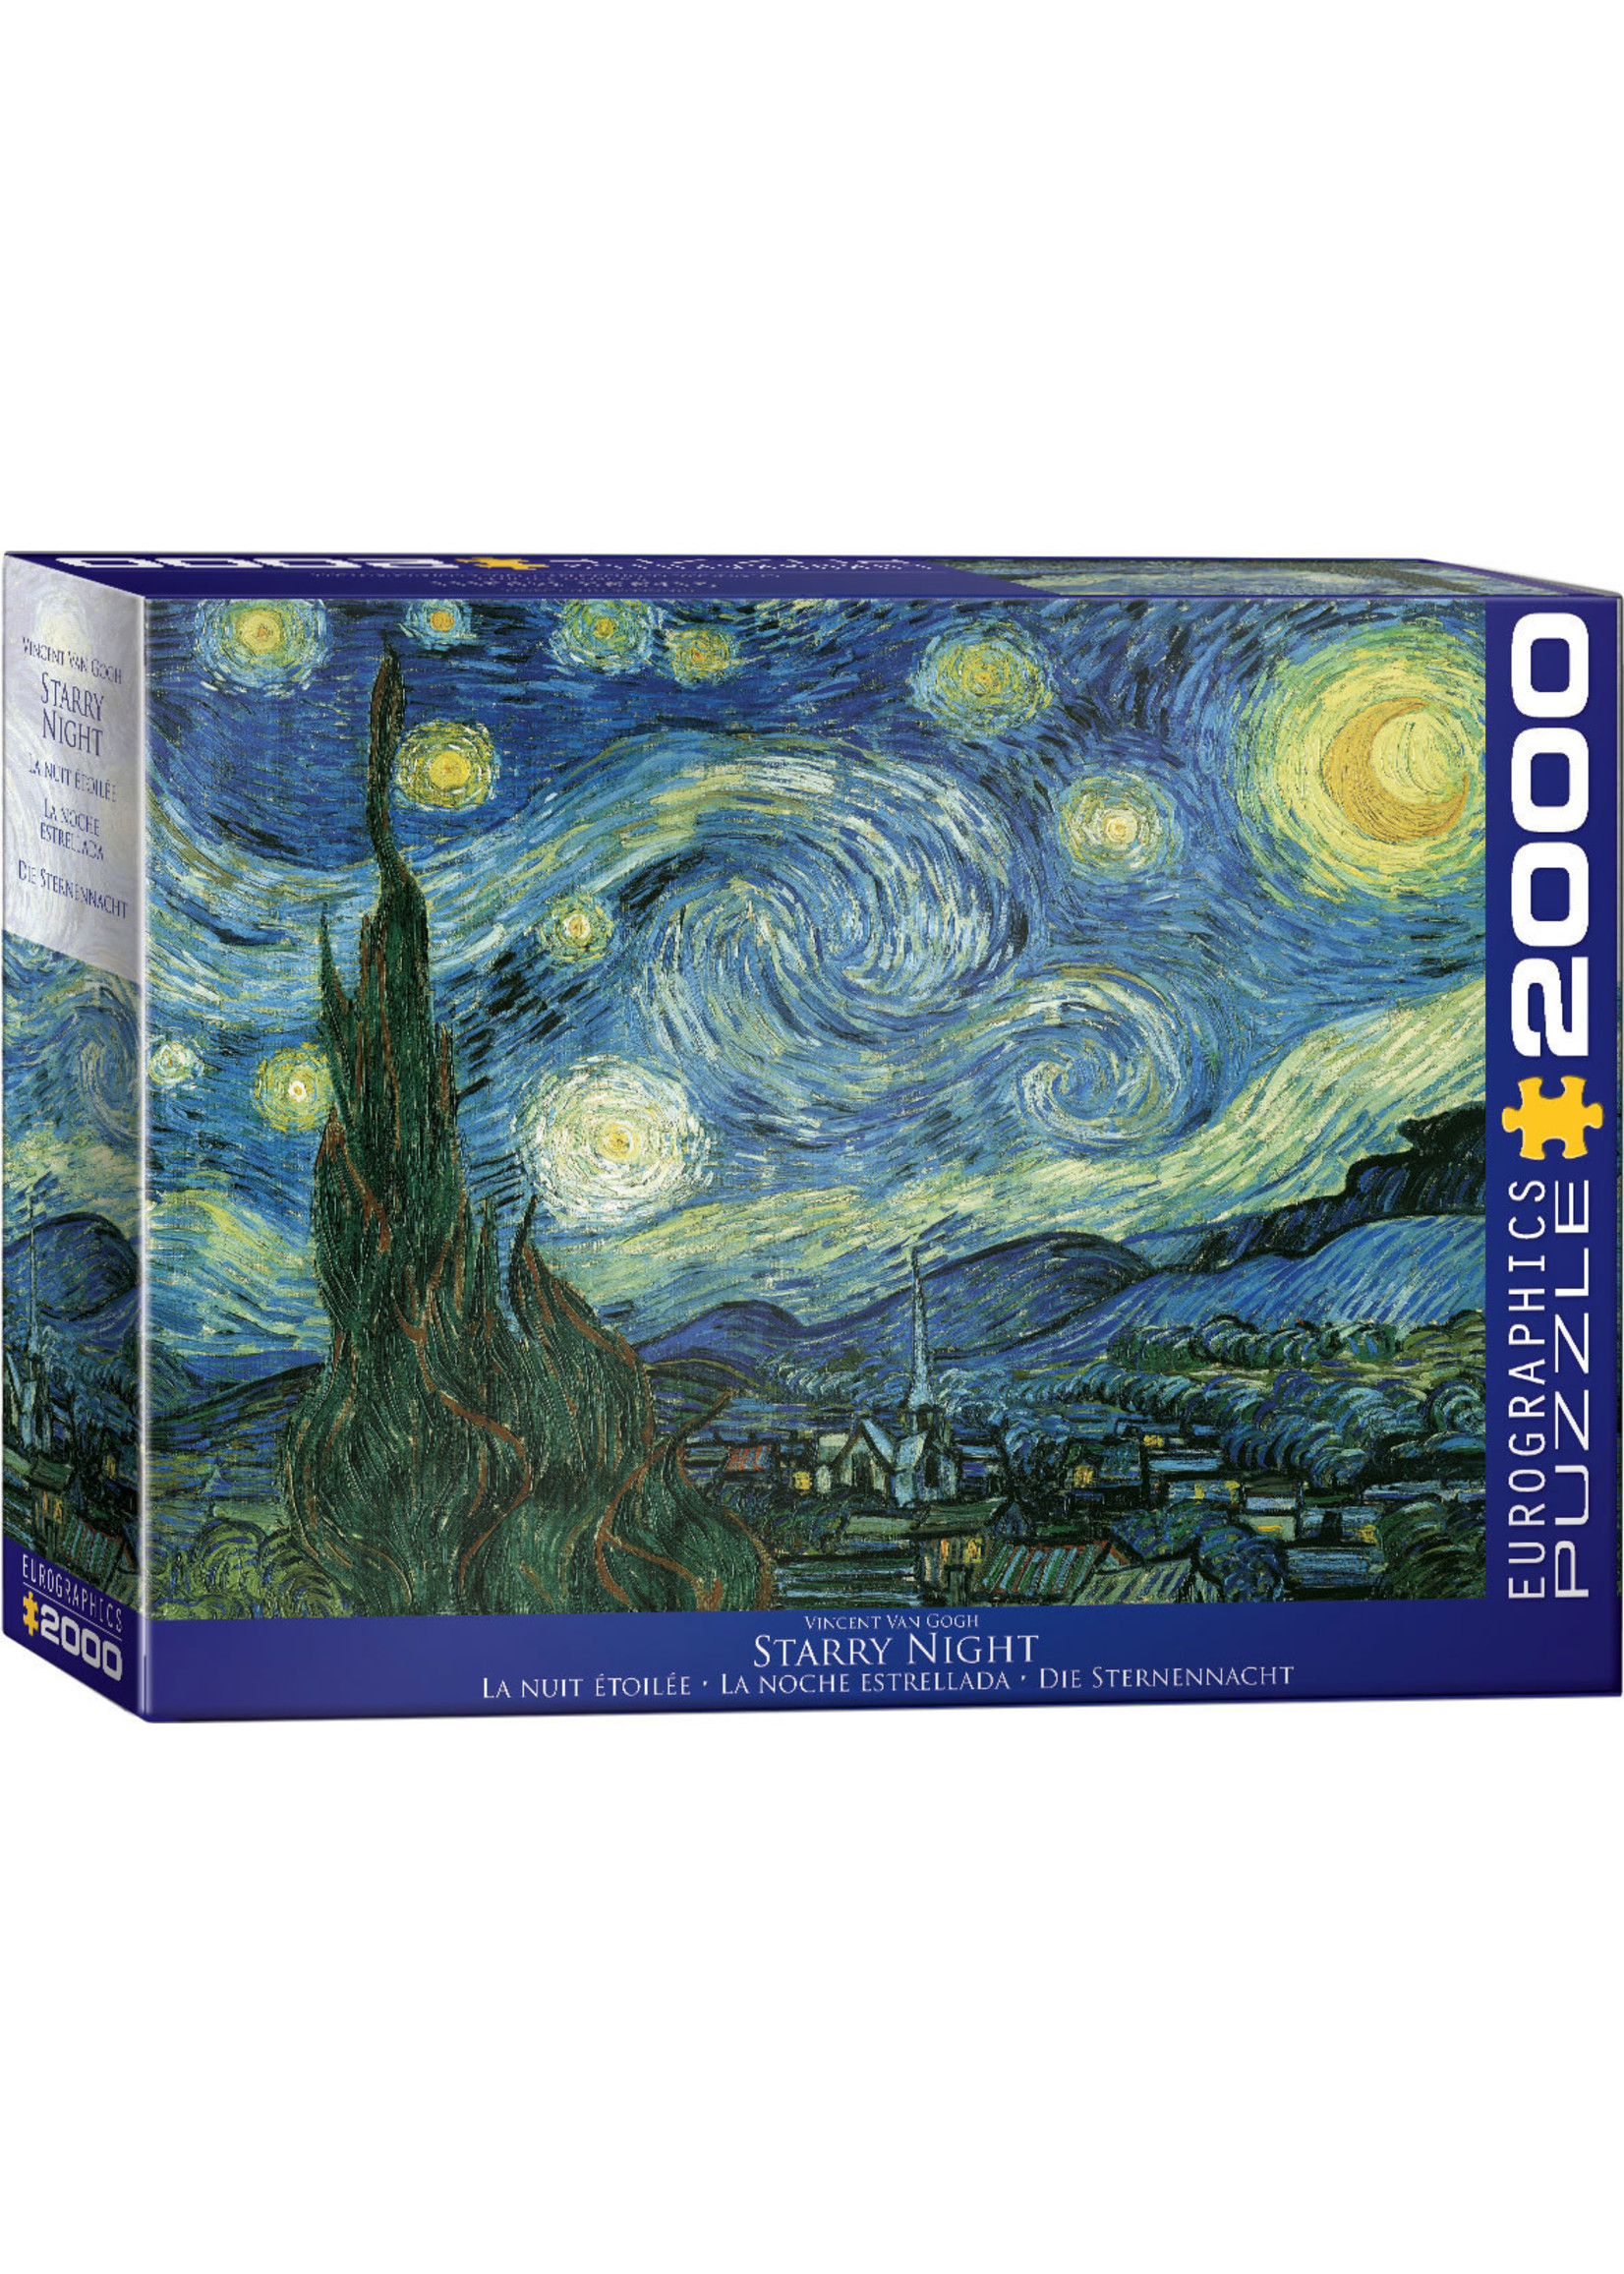 Starry Night / Vincent Van Gogh  Puzzle 2000pc